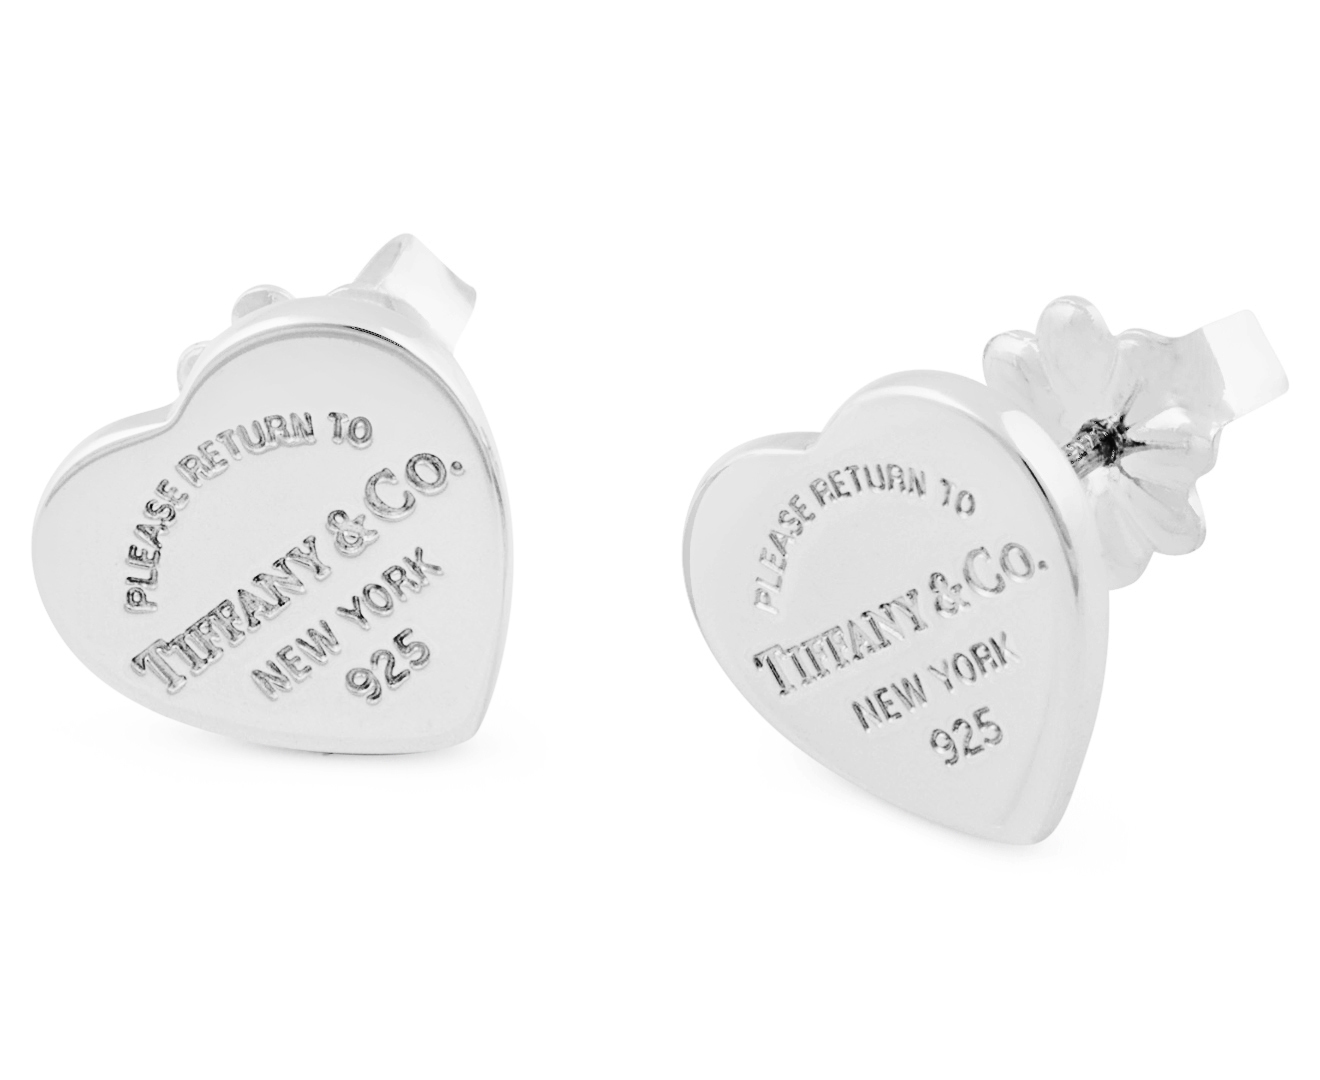 Tiffany & Co. "Return to Tiffany" Mini Heart Tag Stud Earrings - Silver